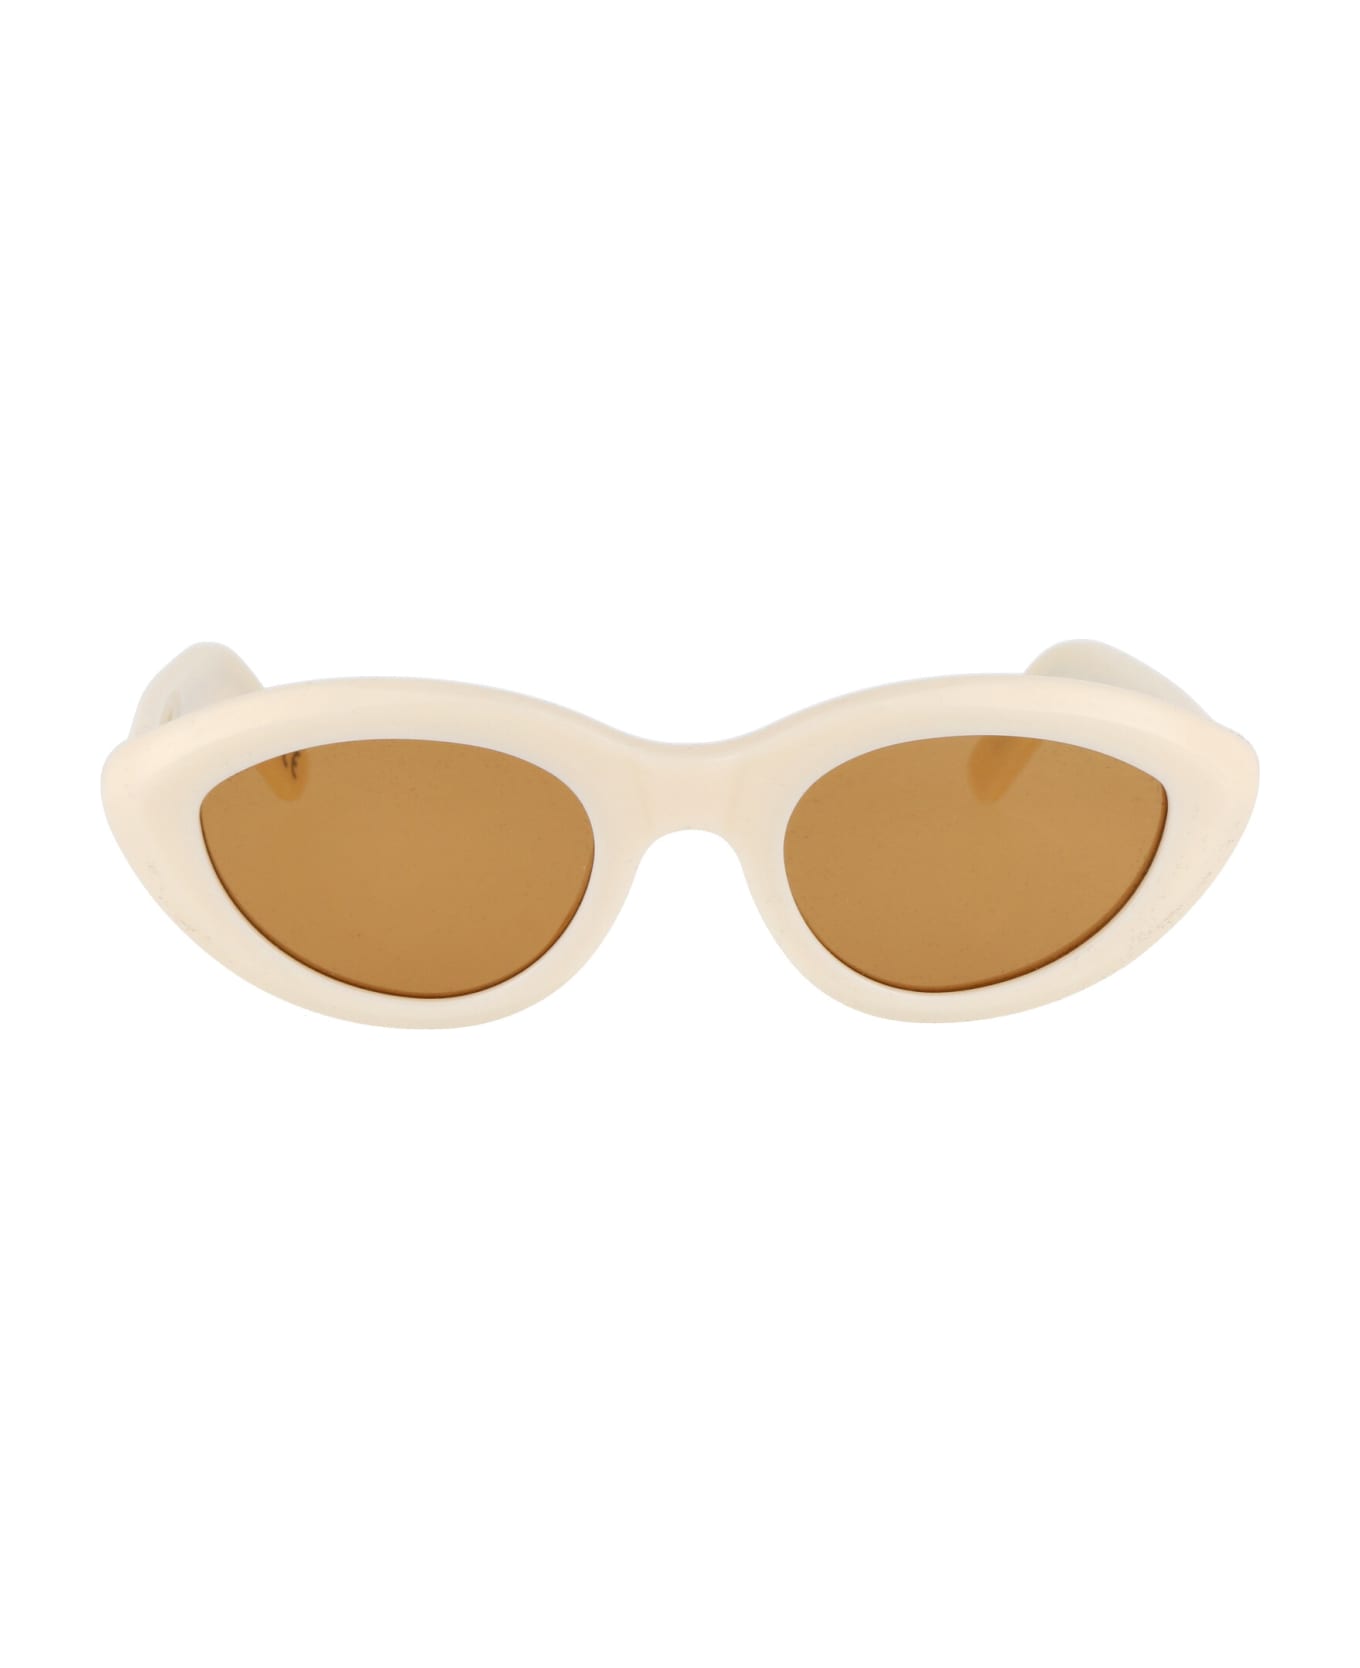 RETROSUPERFUTURE Cocca Sunglasses - PANNA